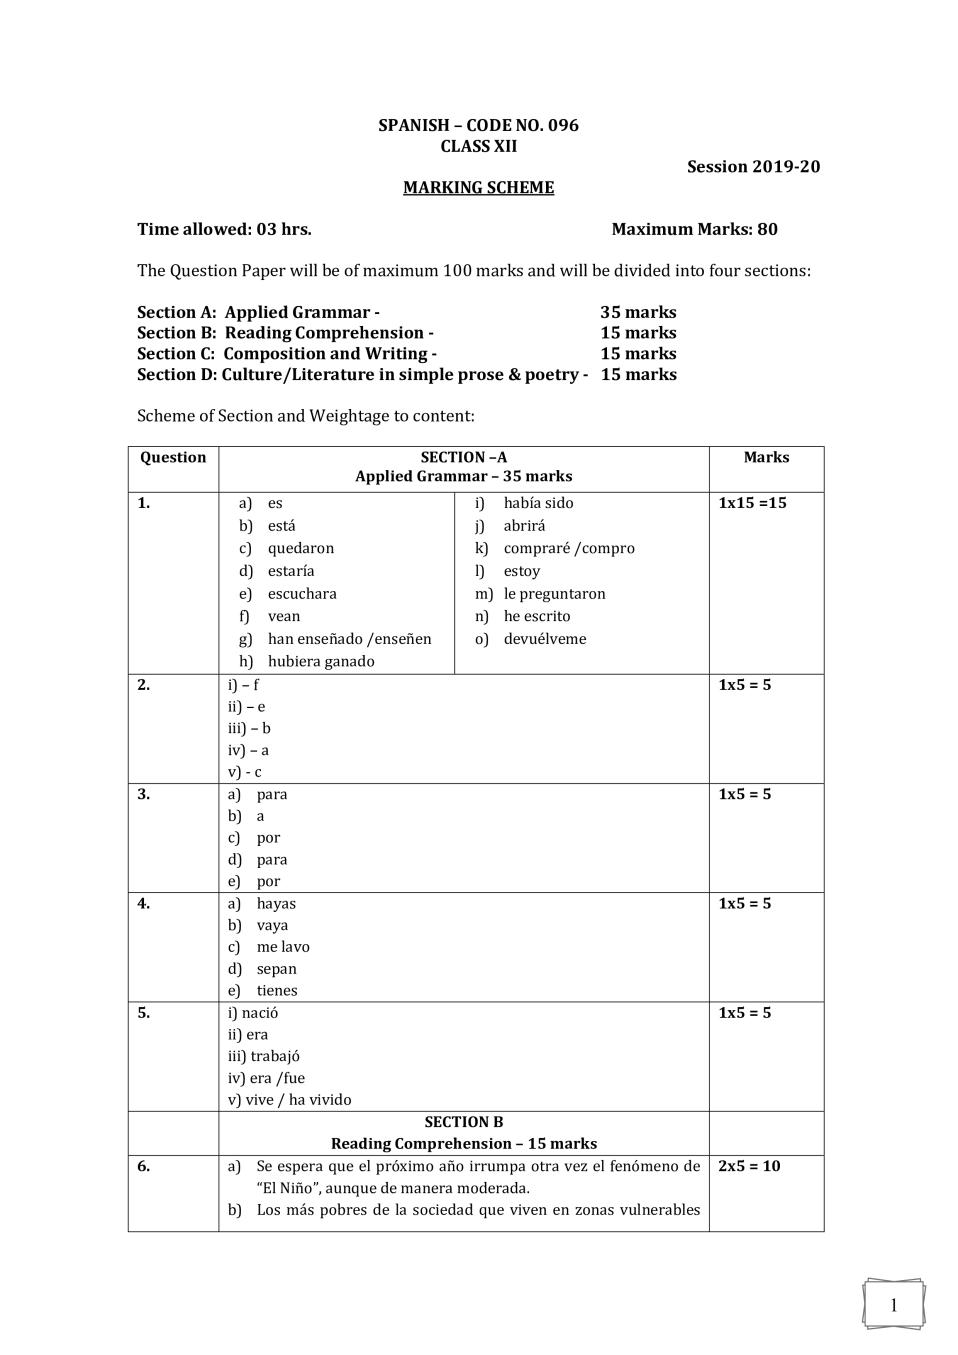 CBSE Class 12 Marking Scheme 2020 for Spanish - Page 1